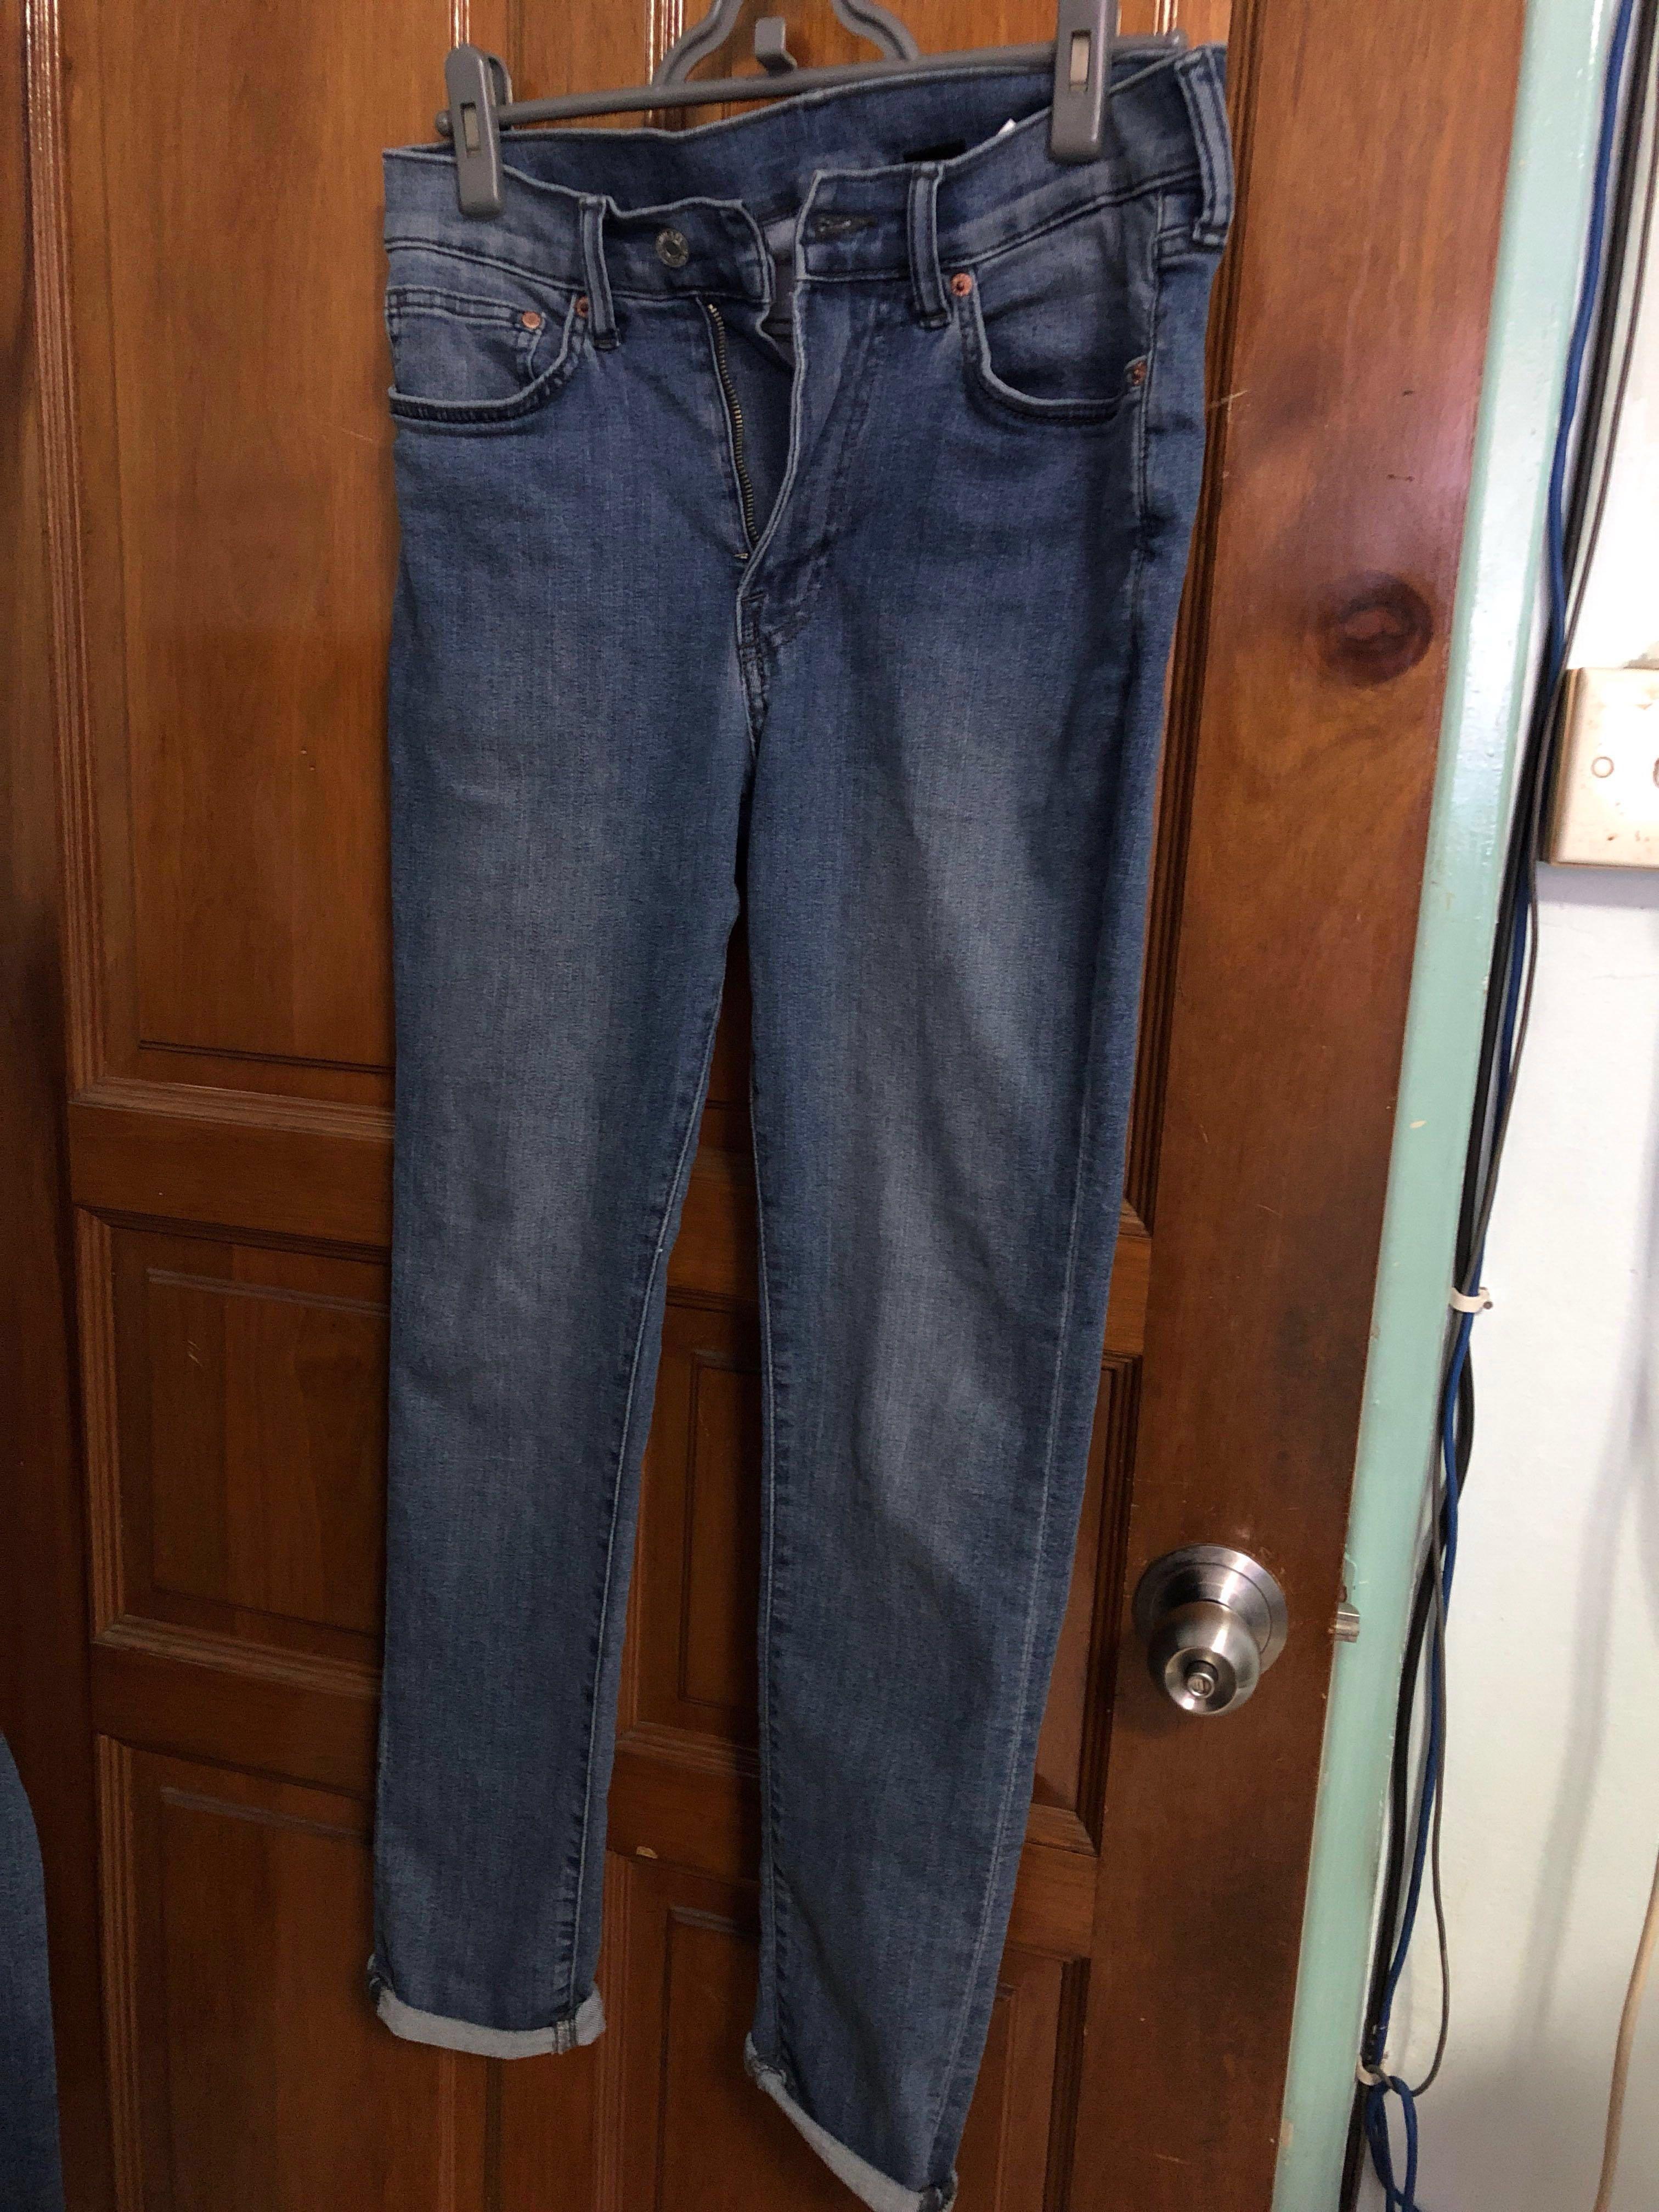 h&m $10 jeans